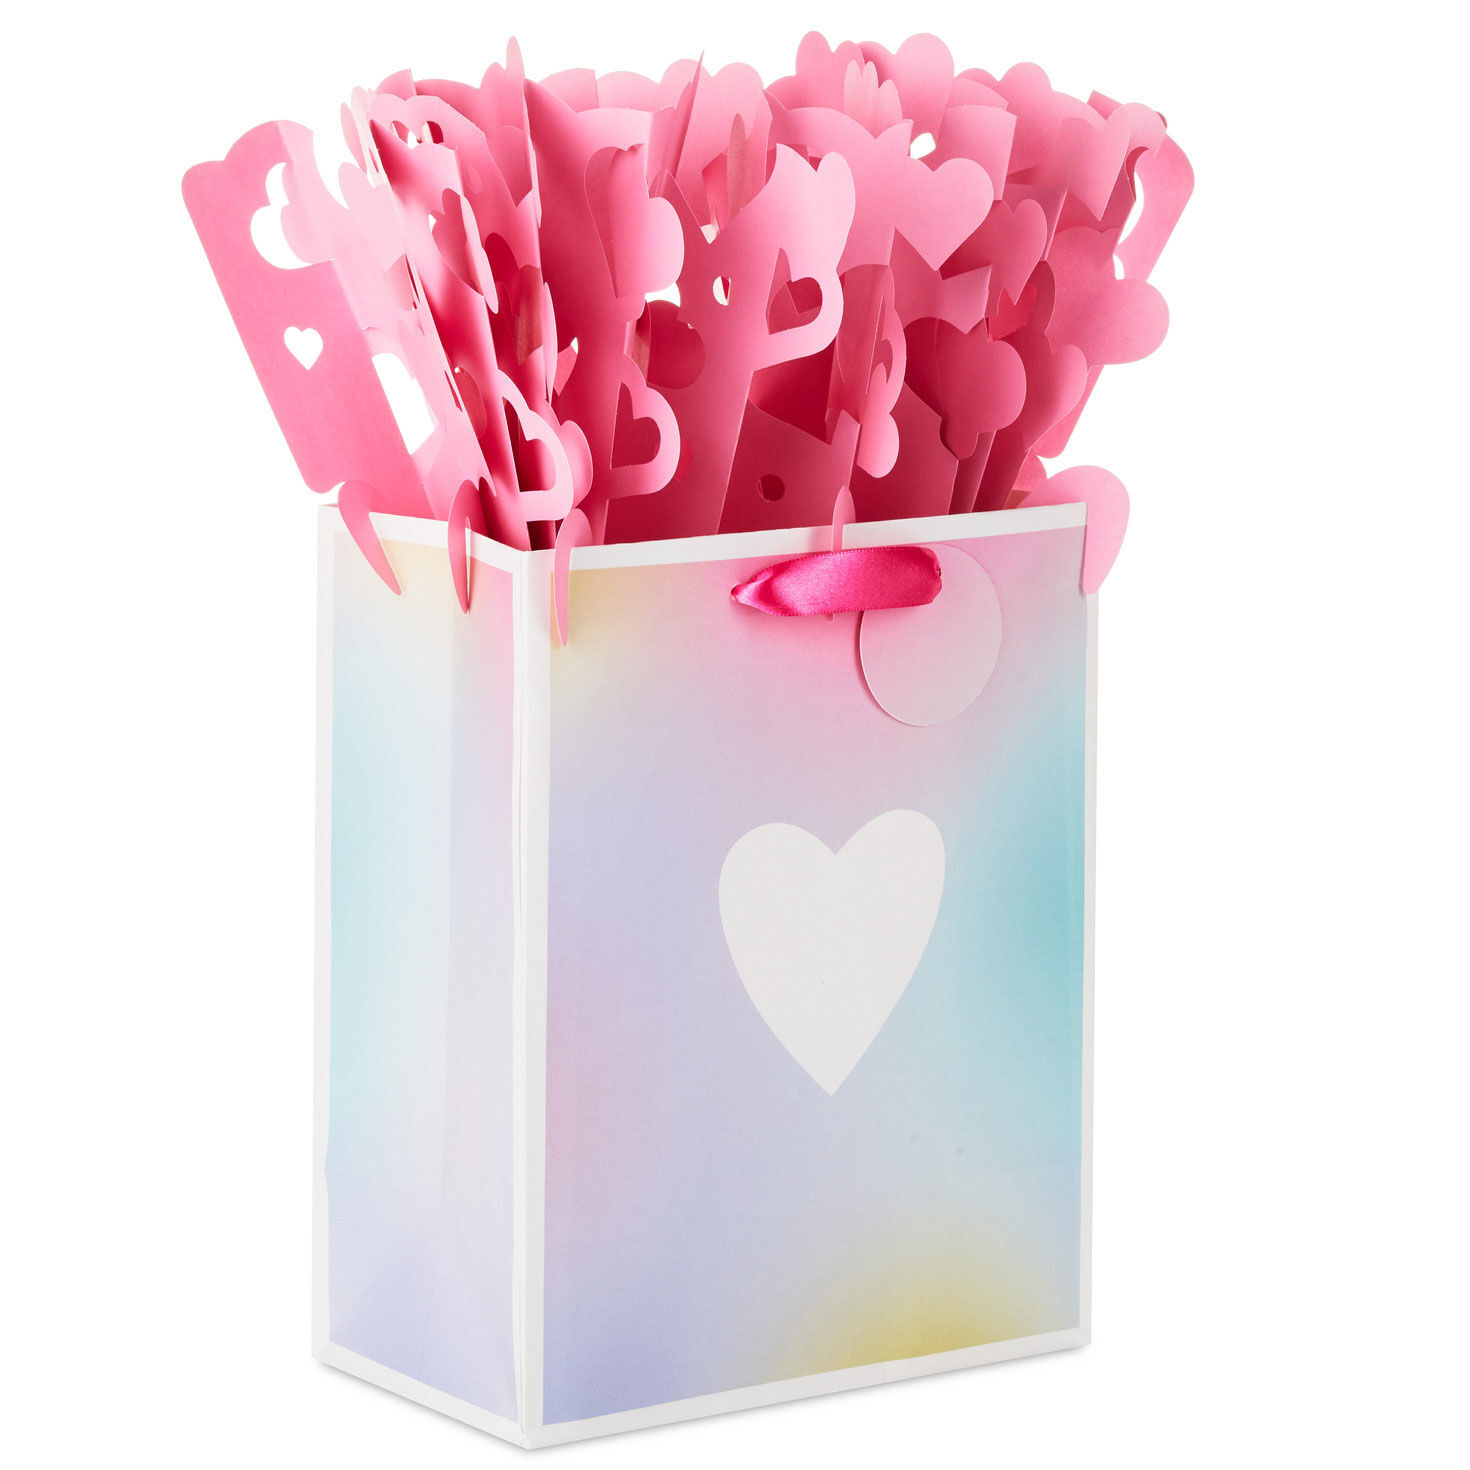 4) Hallmark Happy Valentines Day Red/White Heart Tissue Paper/Gift Bag  Filler